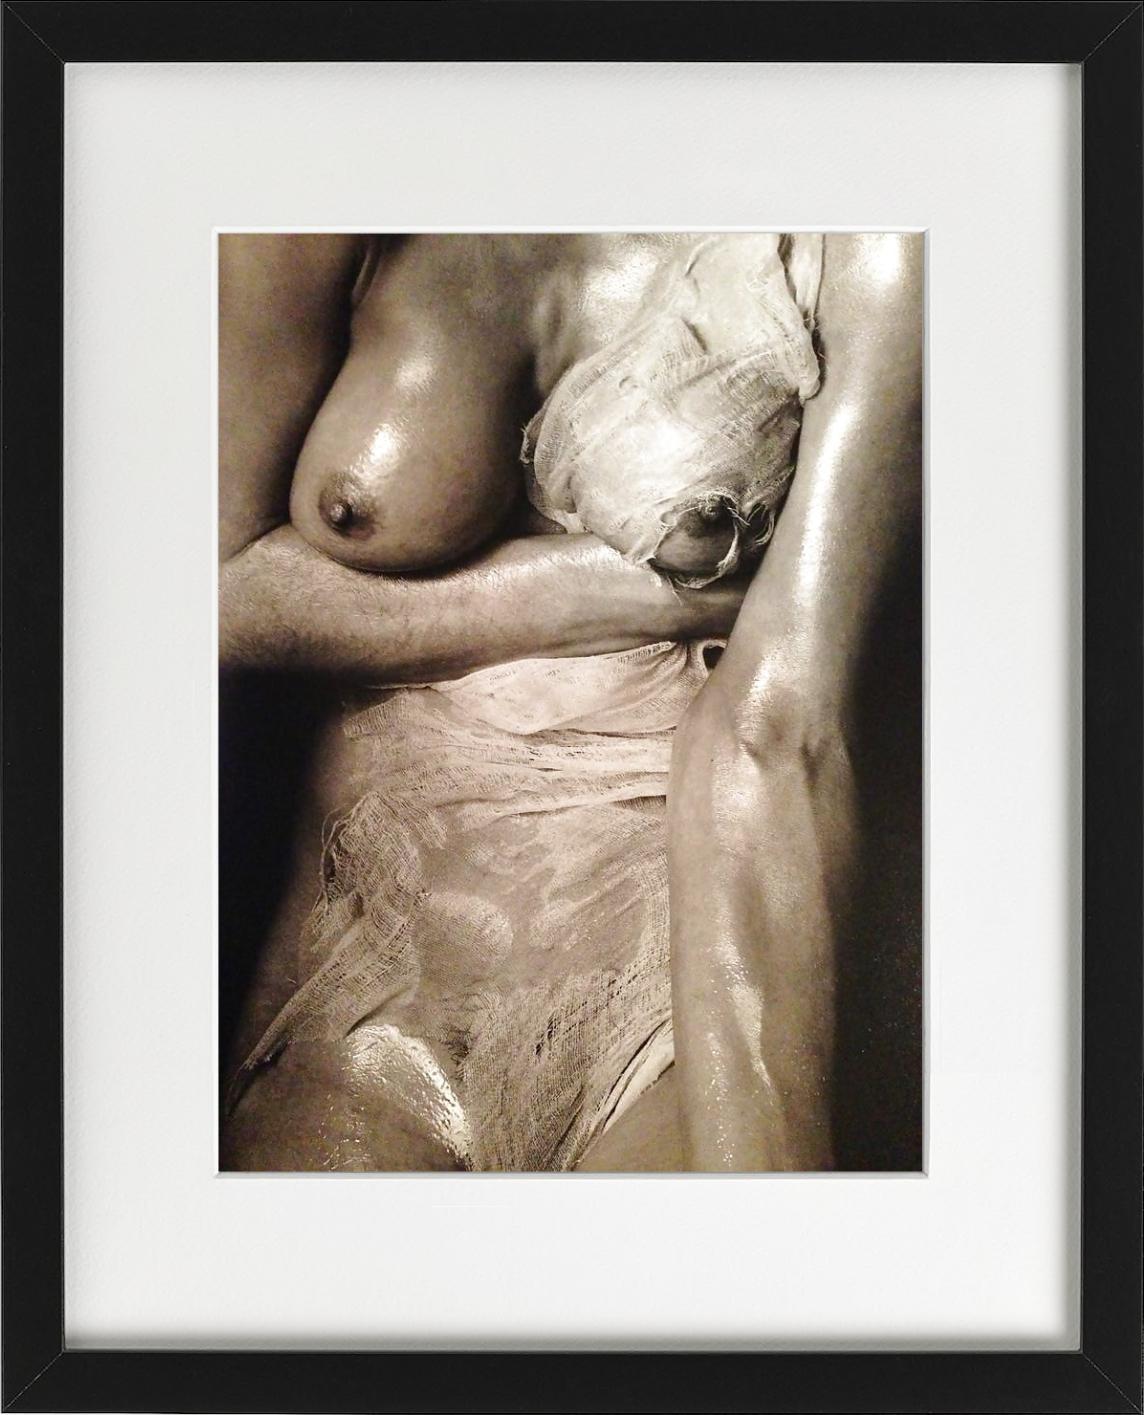 Rachel Williams – nackter Torso aus gerafftem Stoff, Kunstfotografie 1995 (Braun), Color Photograph, von Albert Watson